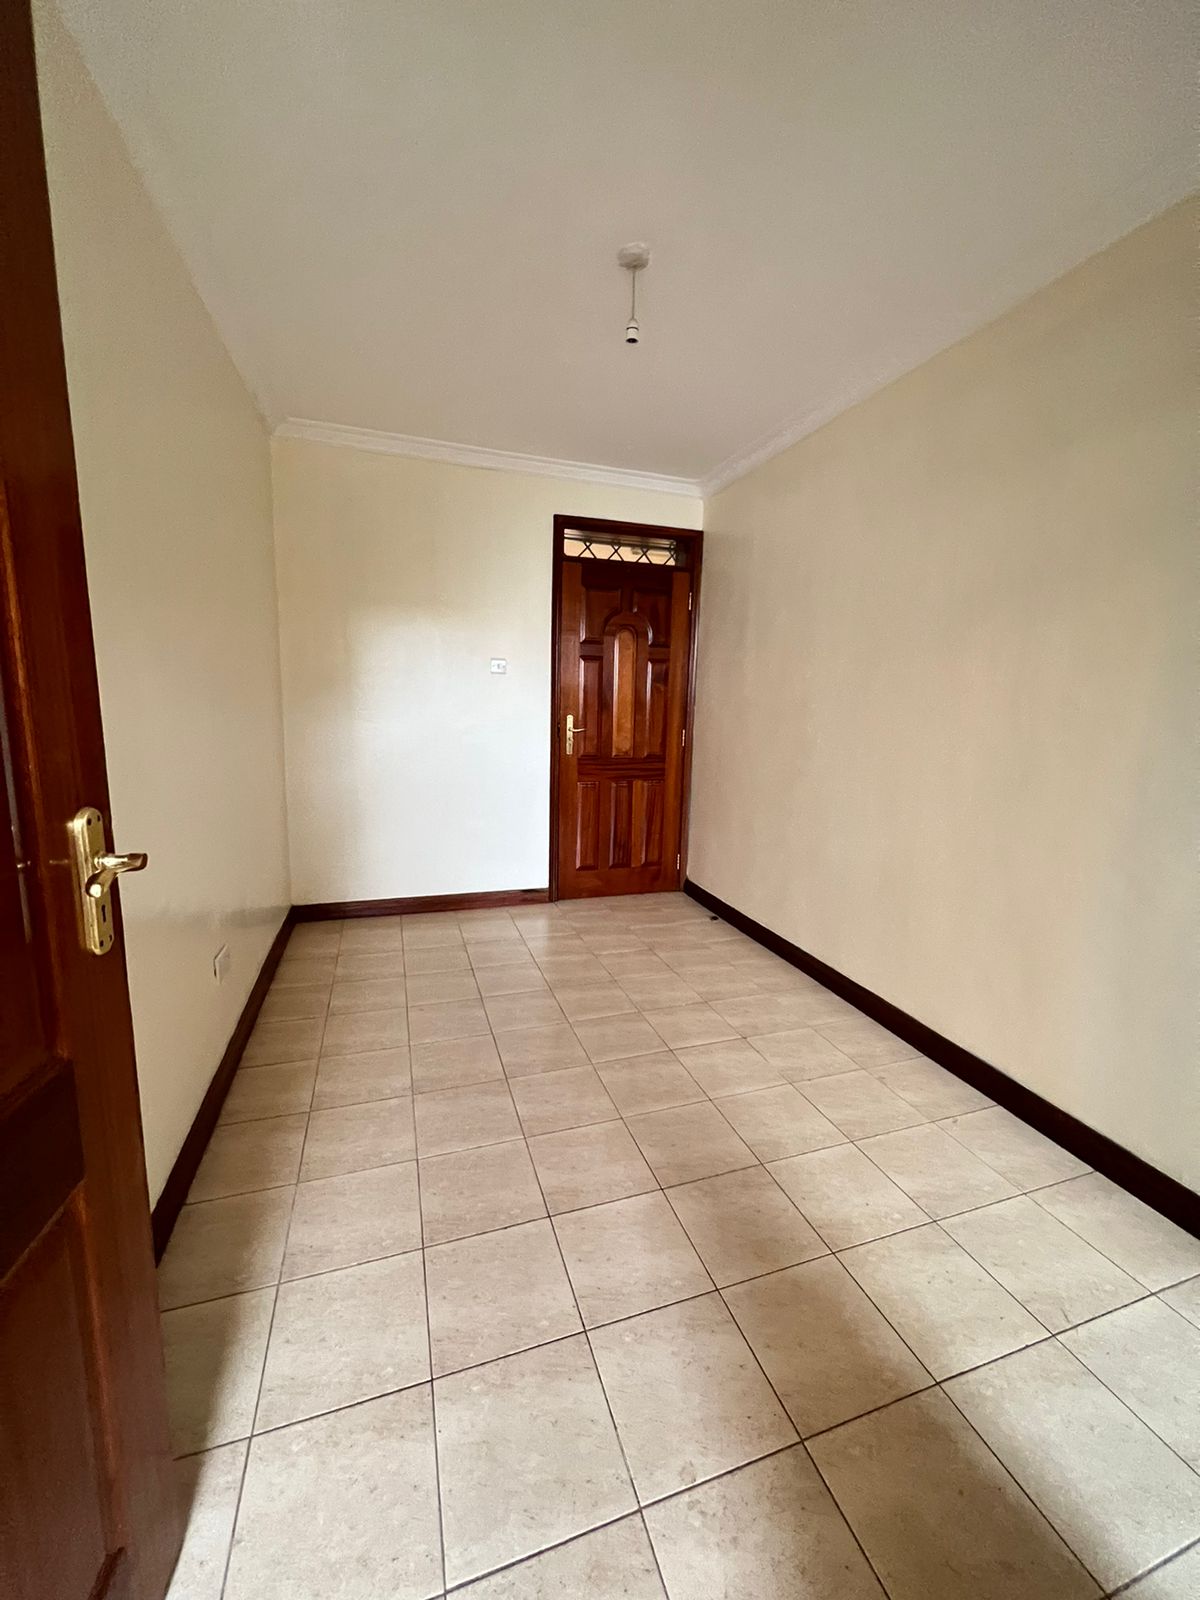 Masanduku apartments located off Mbaazi road- Spacious modern 3 bedroom plus dsq apartment to let. Rent per month 90K Musilli Homes